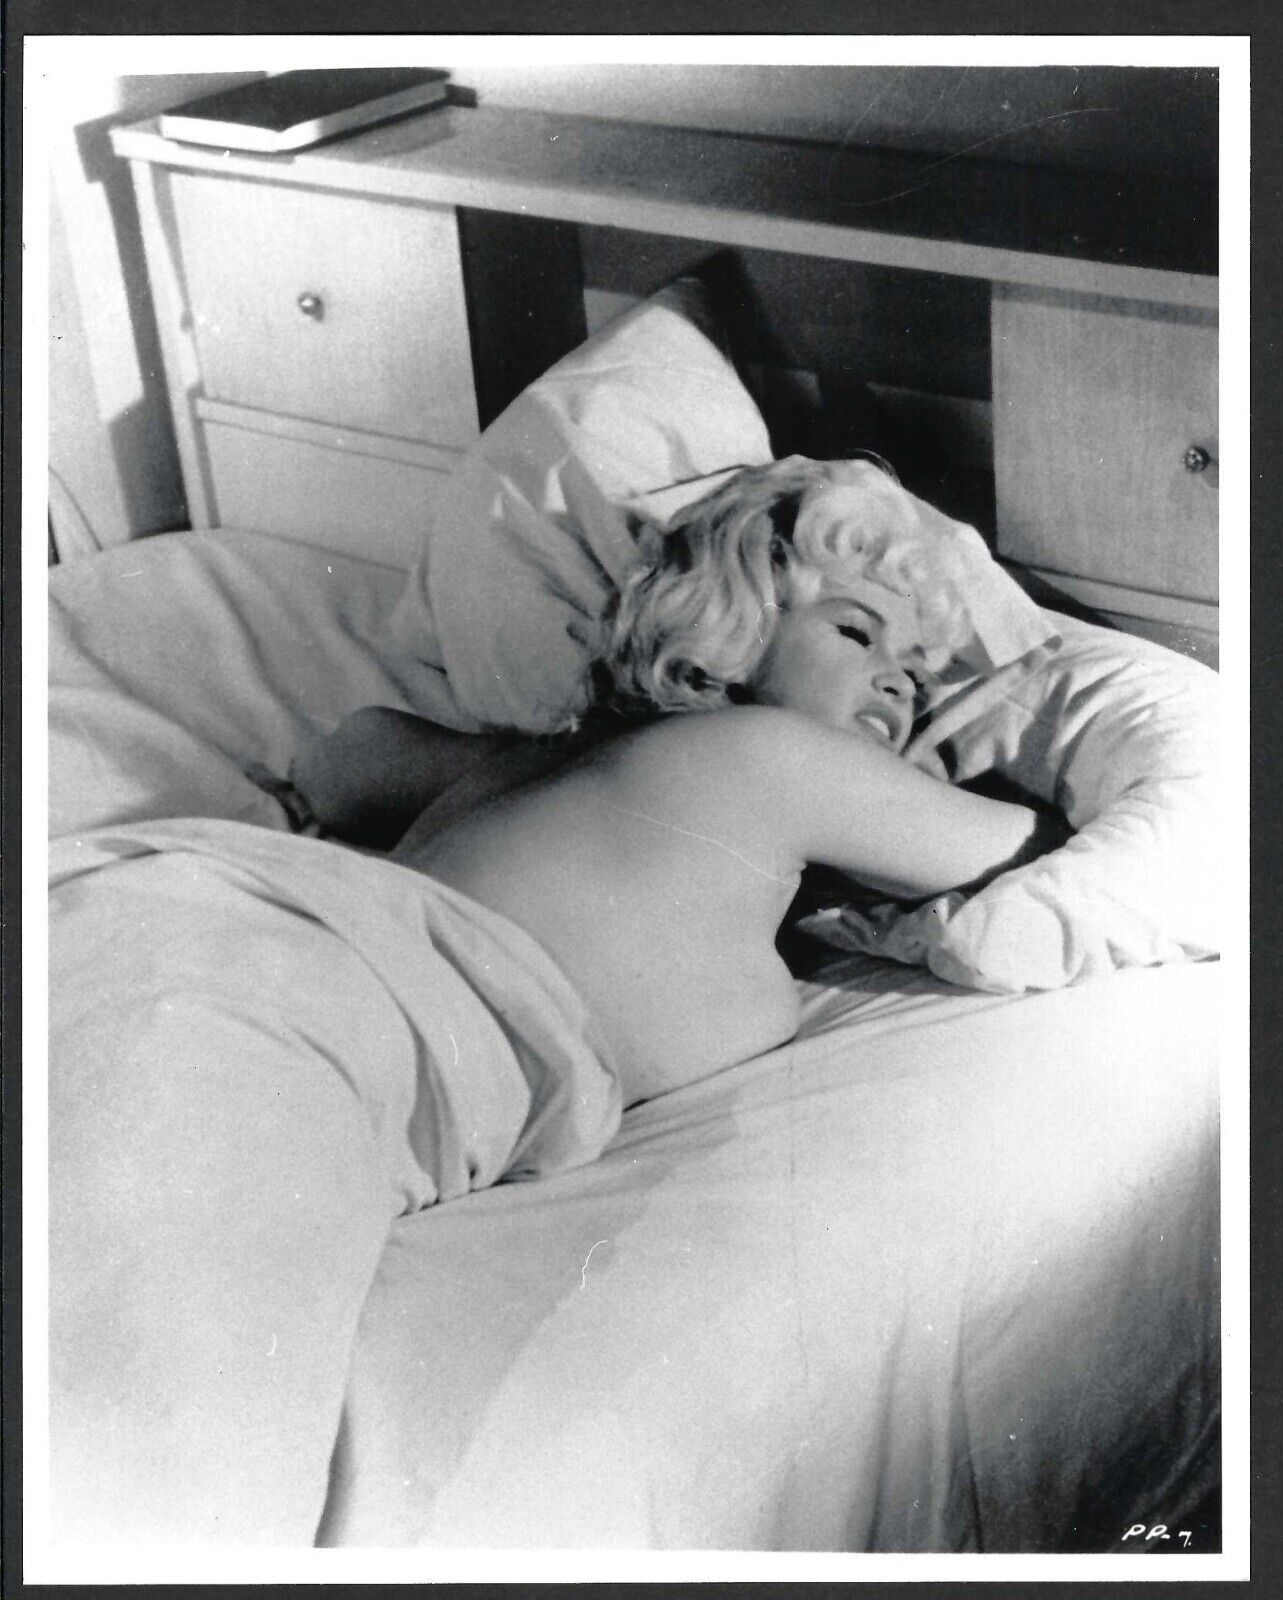 HOLLYWOOD JAYNE MANSFIELD ACTRESS ON BED VINTAGE ORIGINAL PHOTO